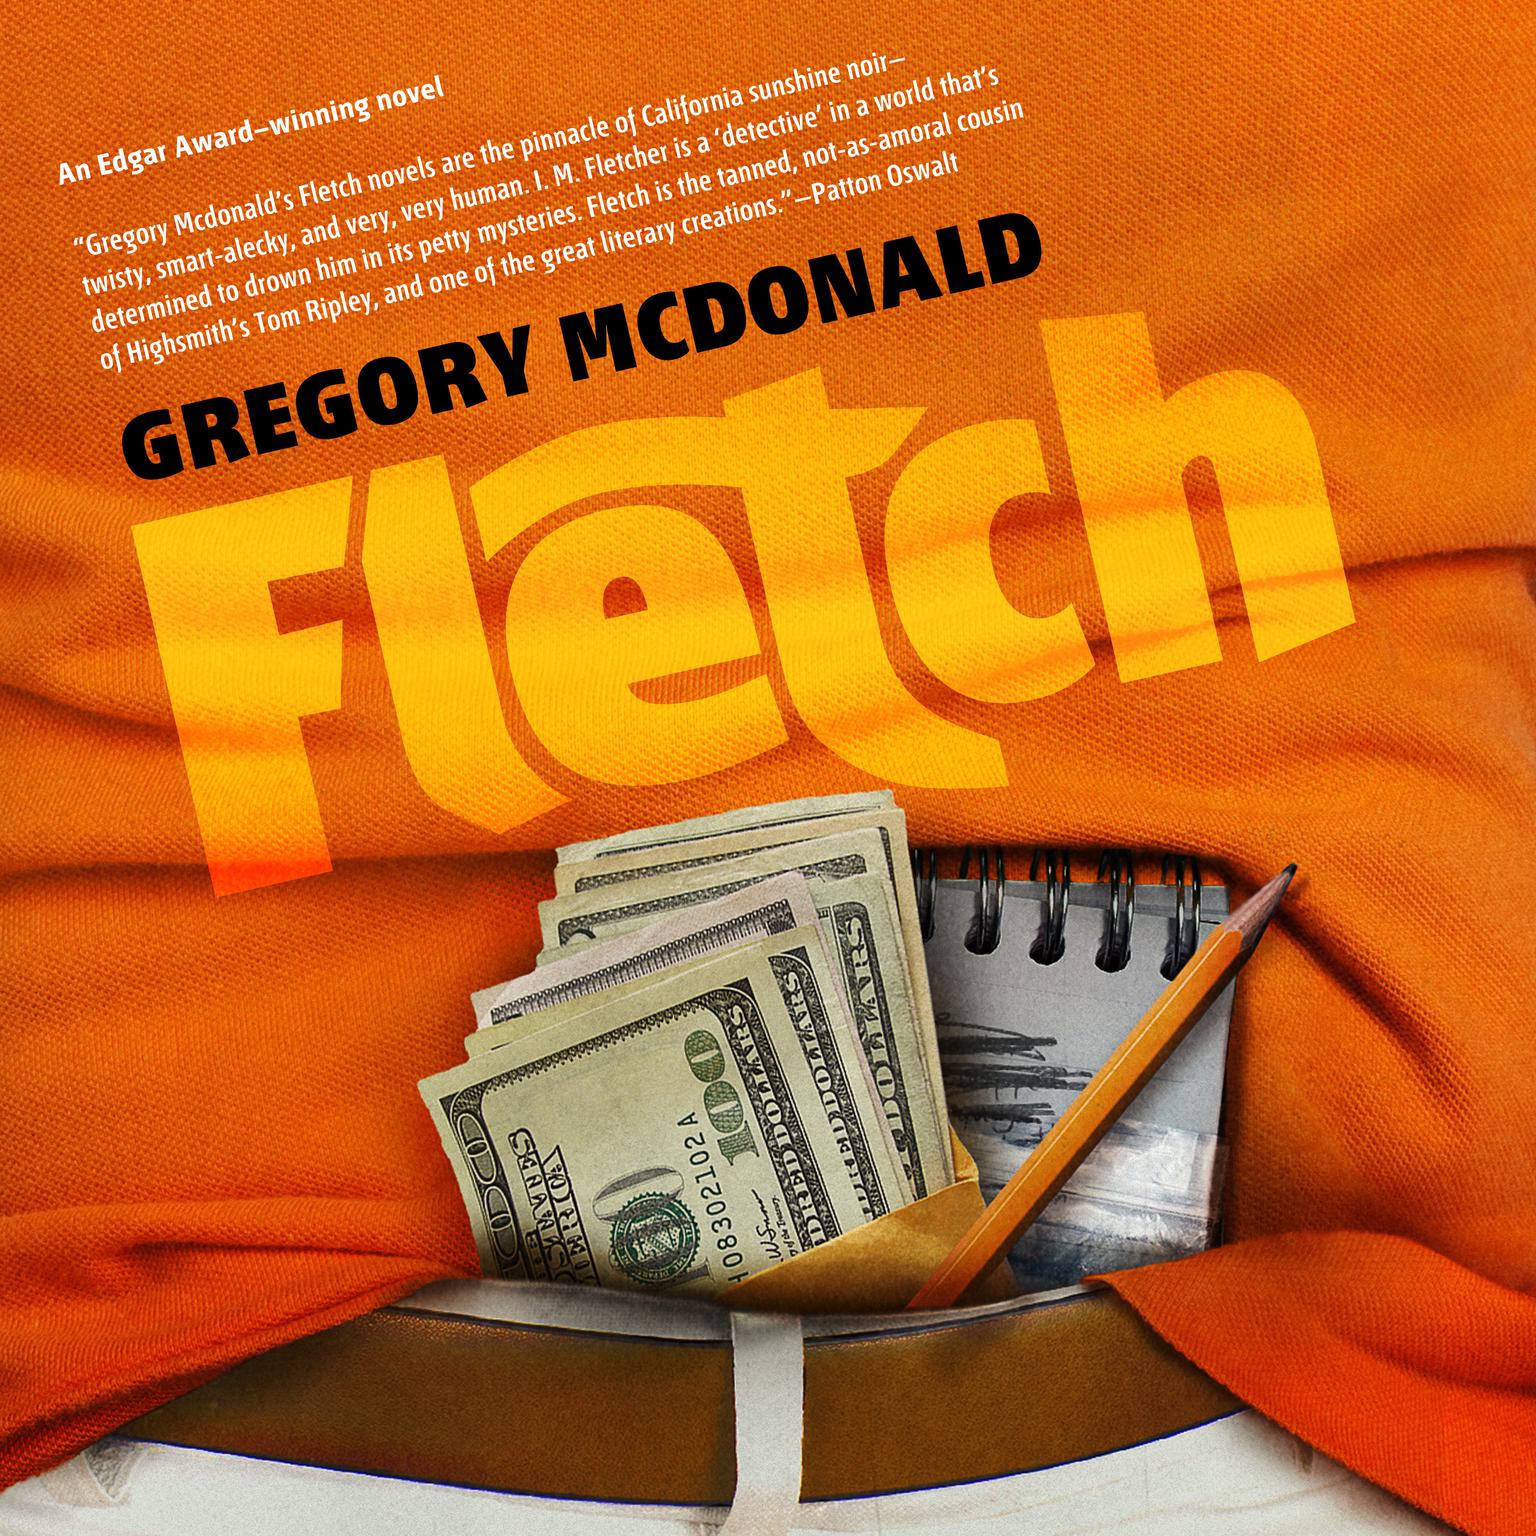 Fletch Audiobook, by Gregory Mcdonald